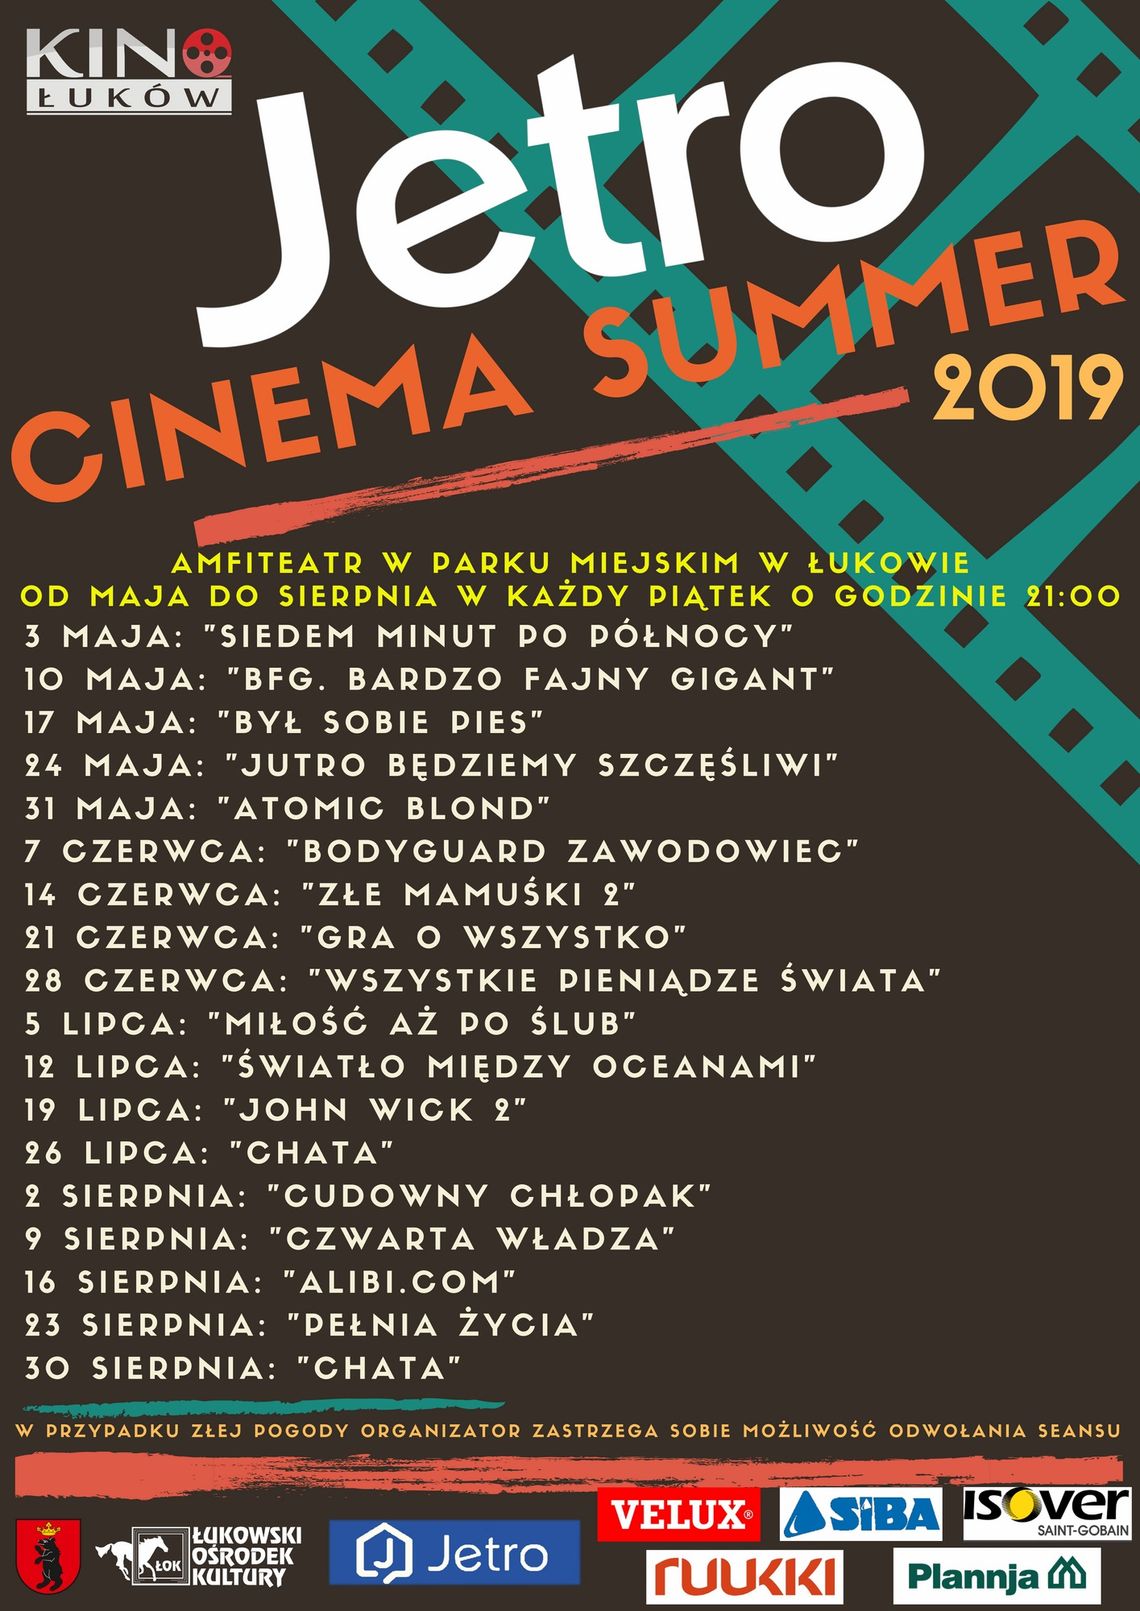 JETRO CINEMA SUMMER - „John Wick 2”